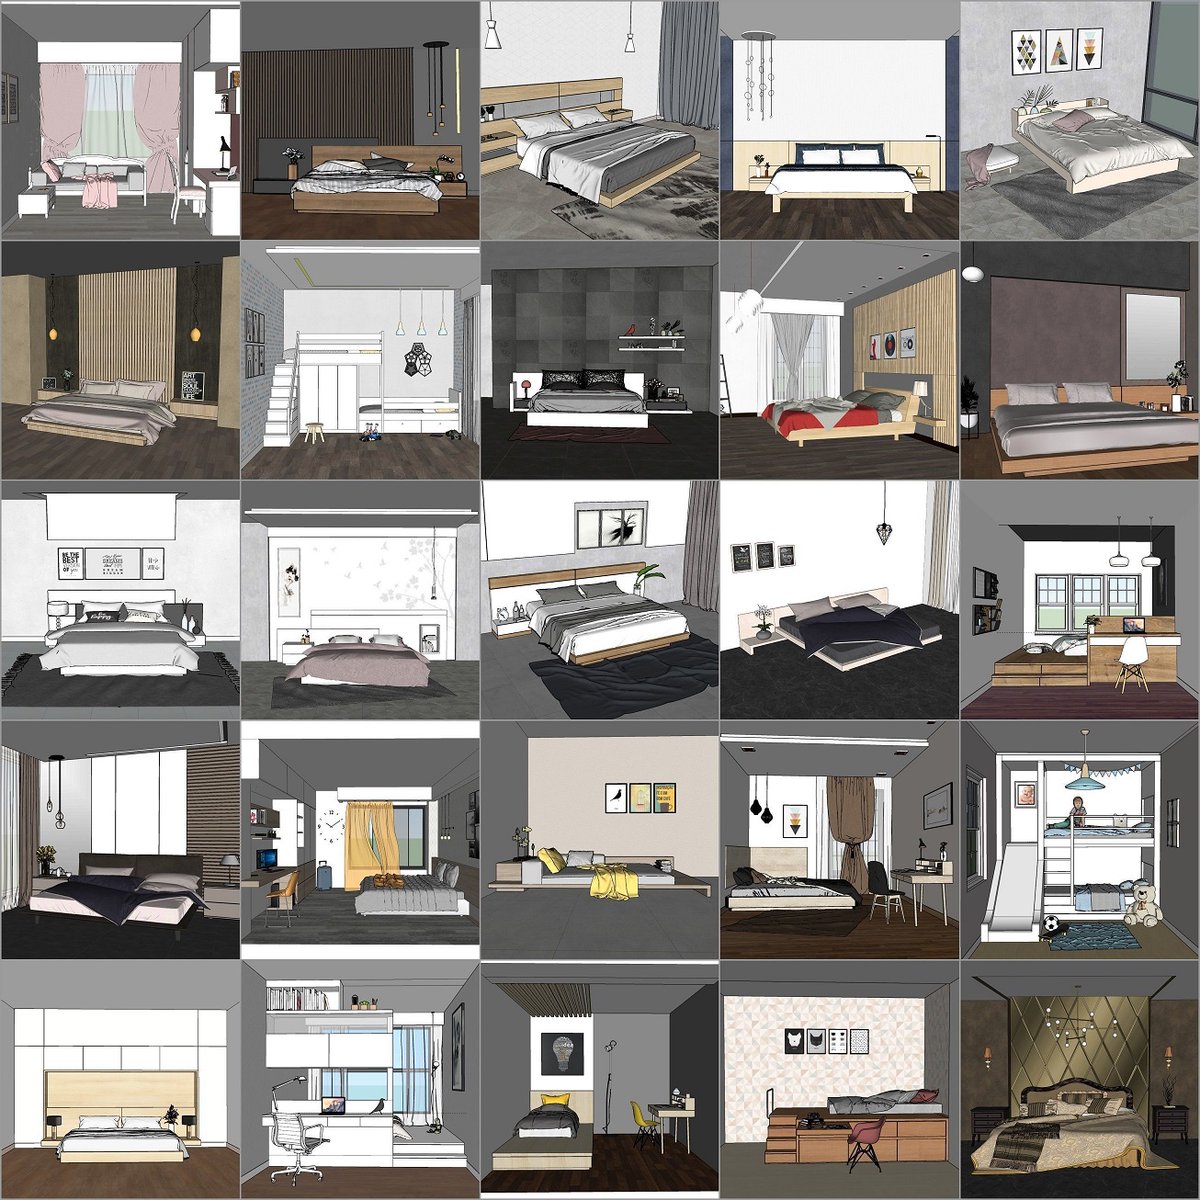 3dnikmodels.com / 25 Bedroom 3d models #sketchup @SketchUpSpain @easysketchup #bedroom #interiordesign #bedroomdesign